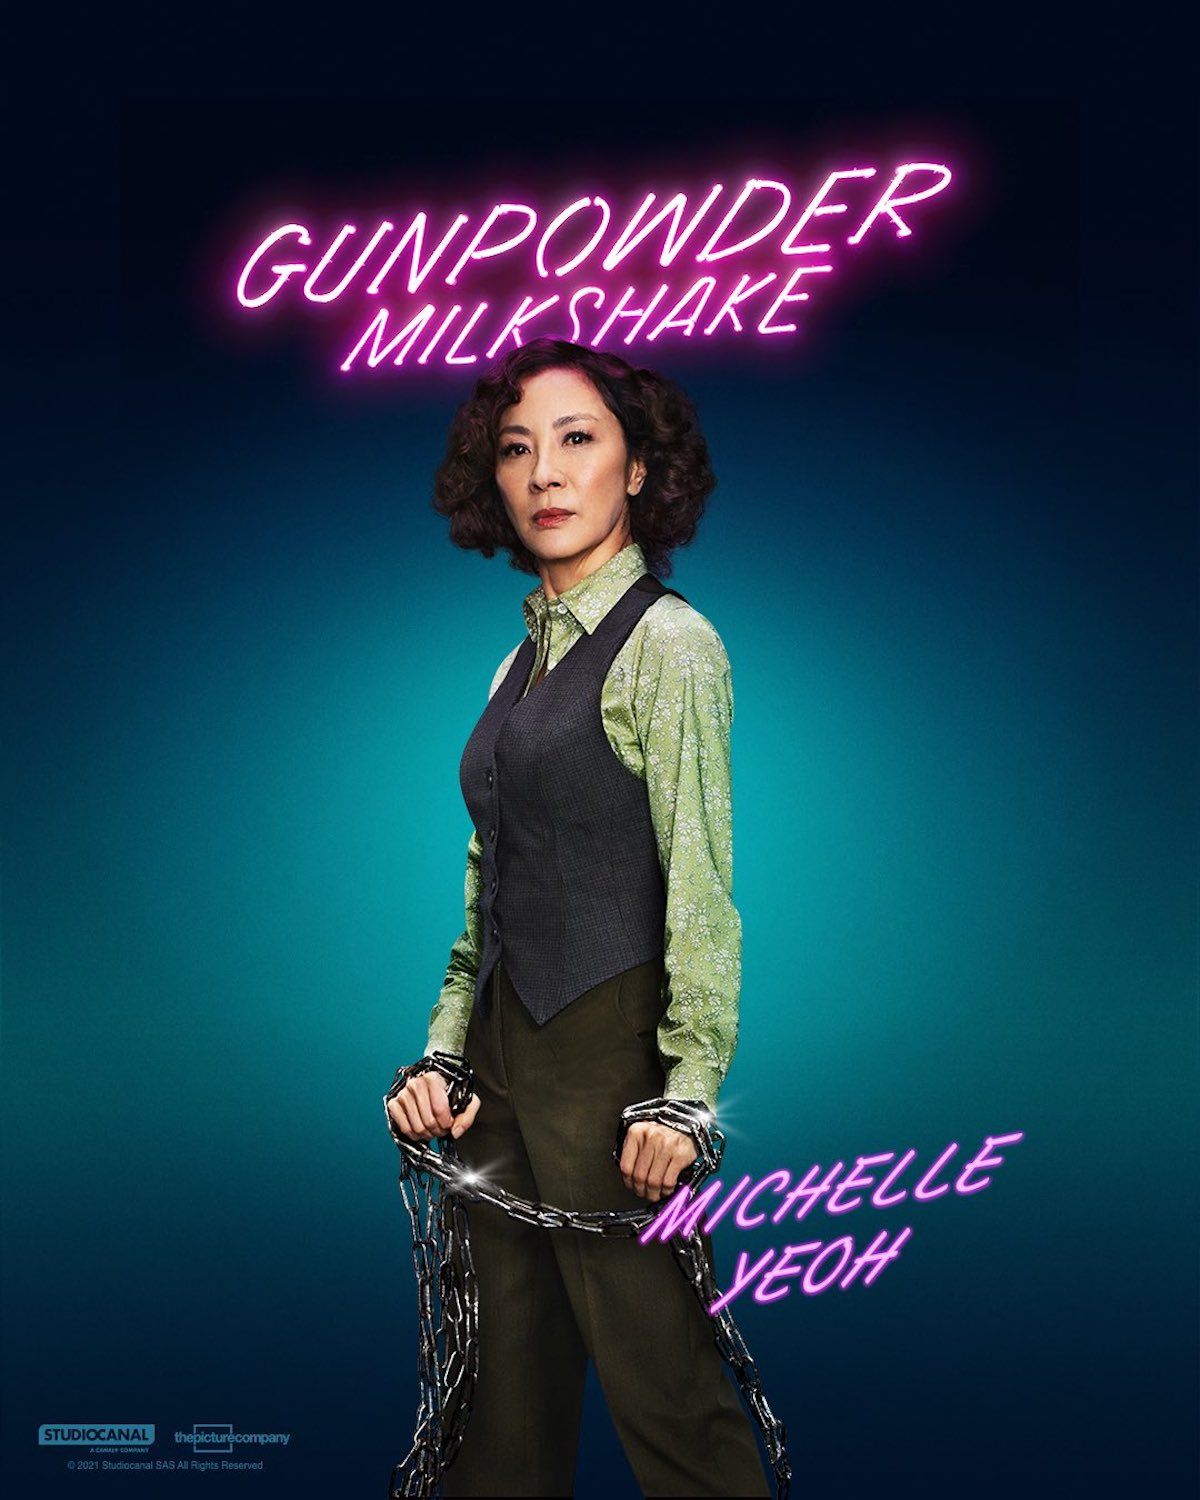 gunpowder-milkshake-michelle-yeoh-poster